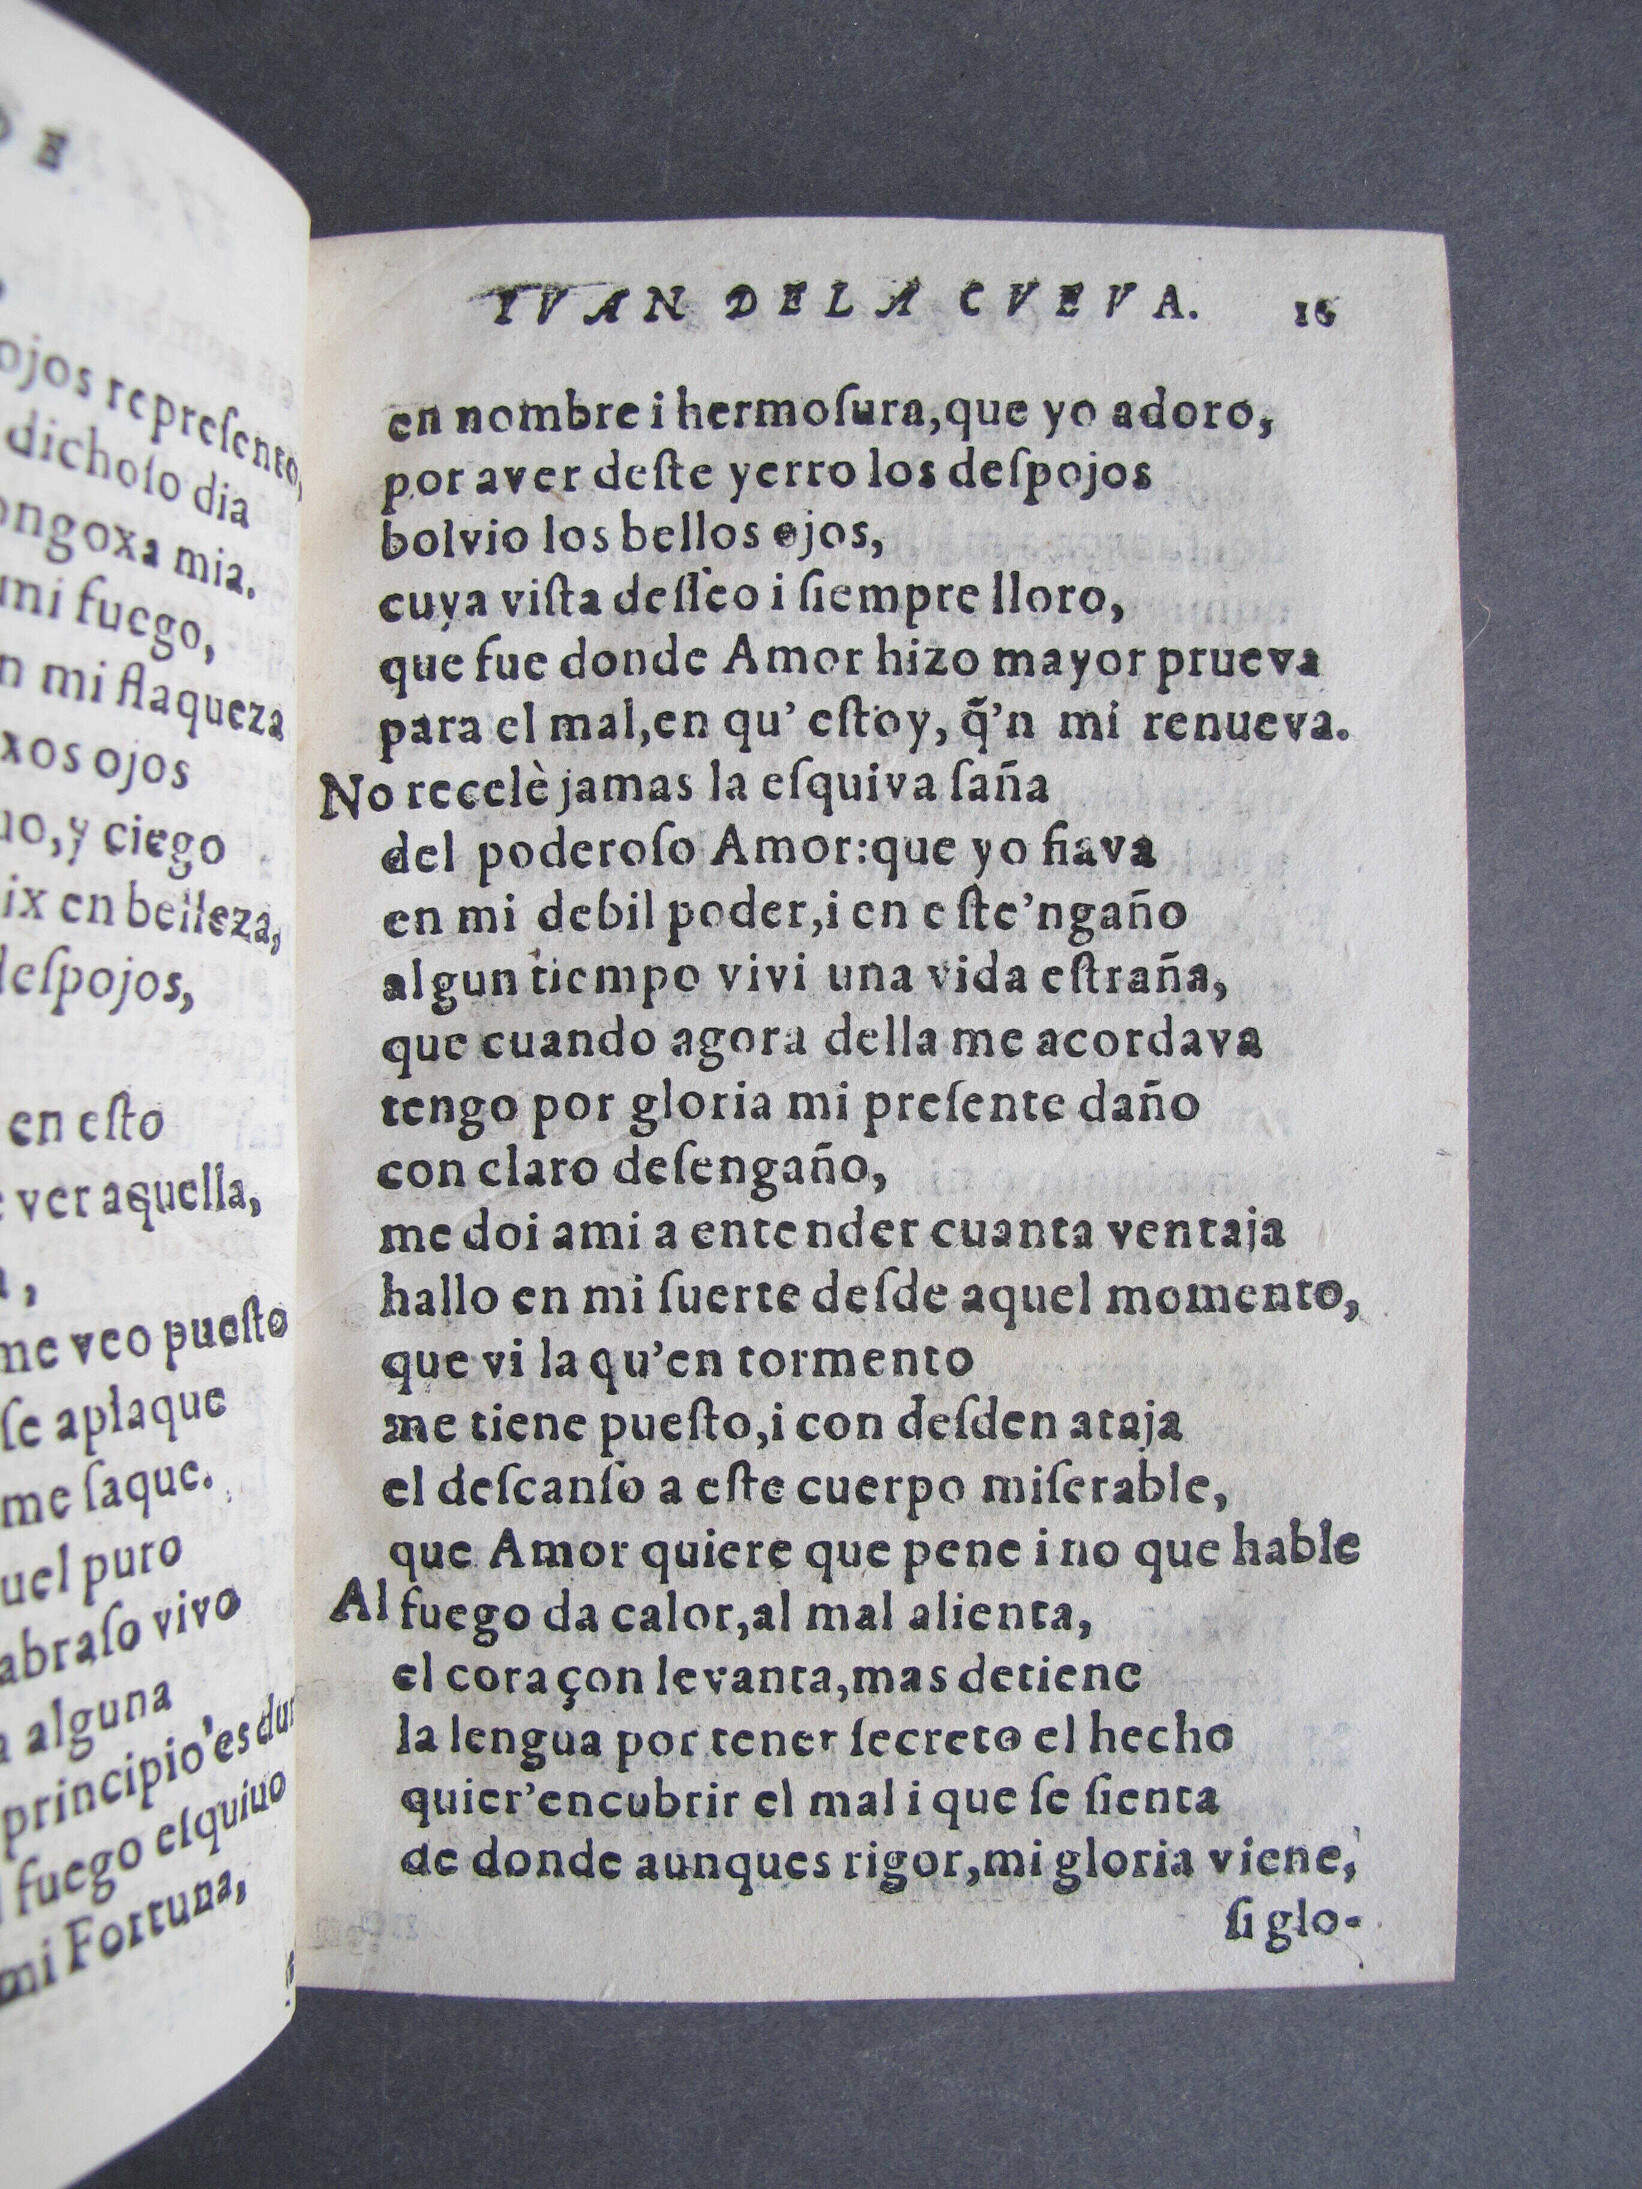 Folio B8